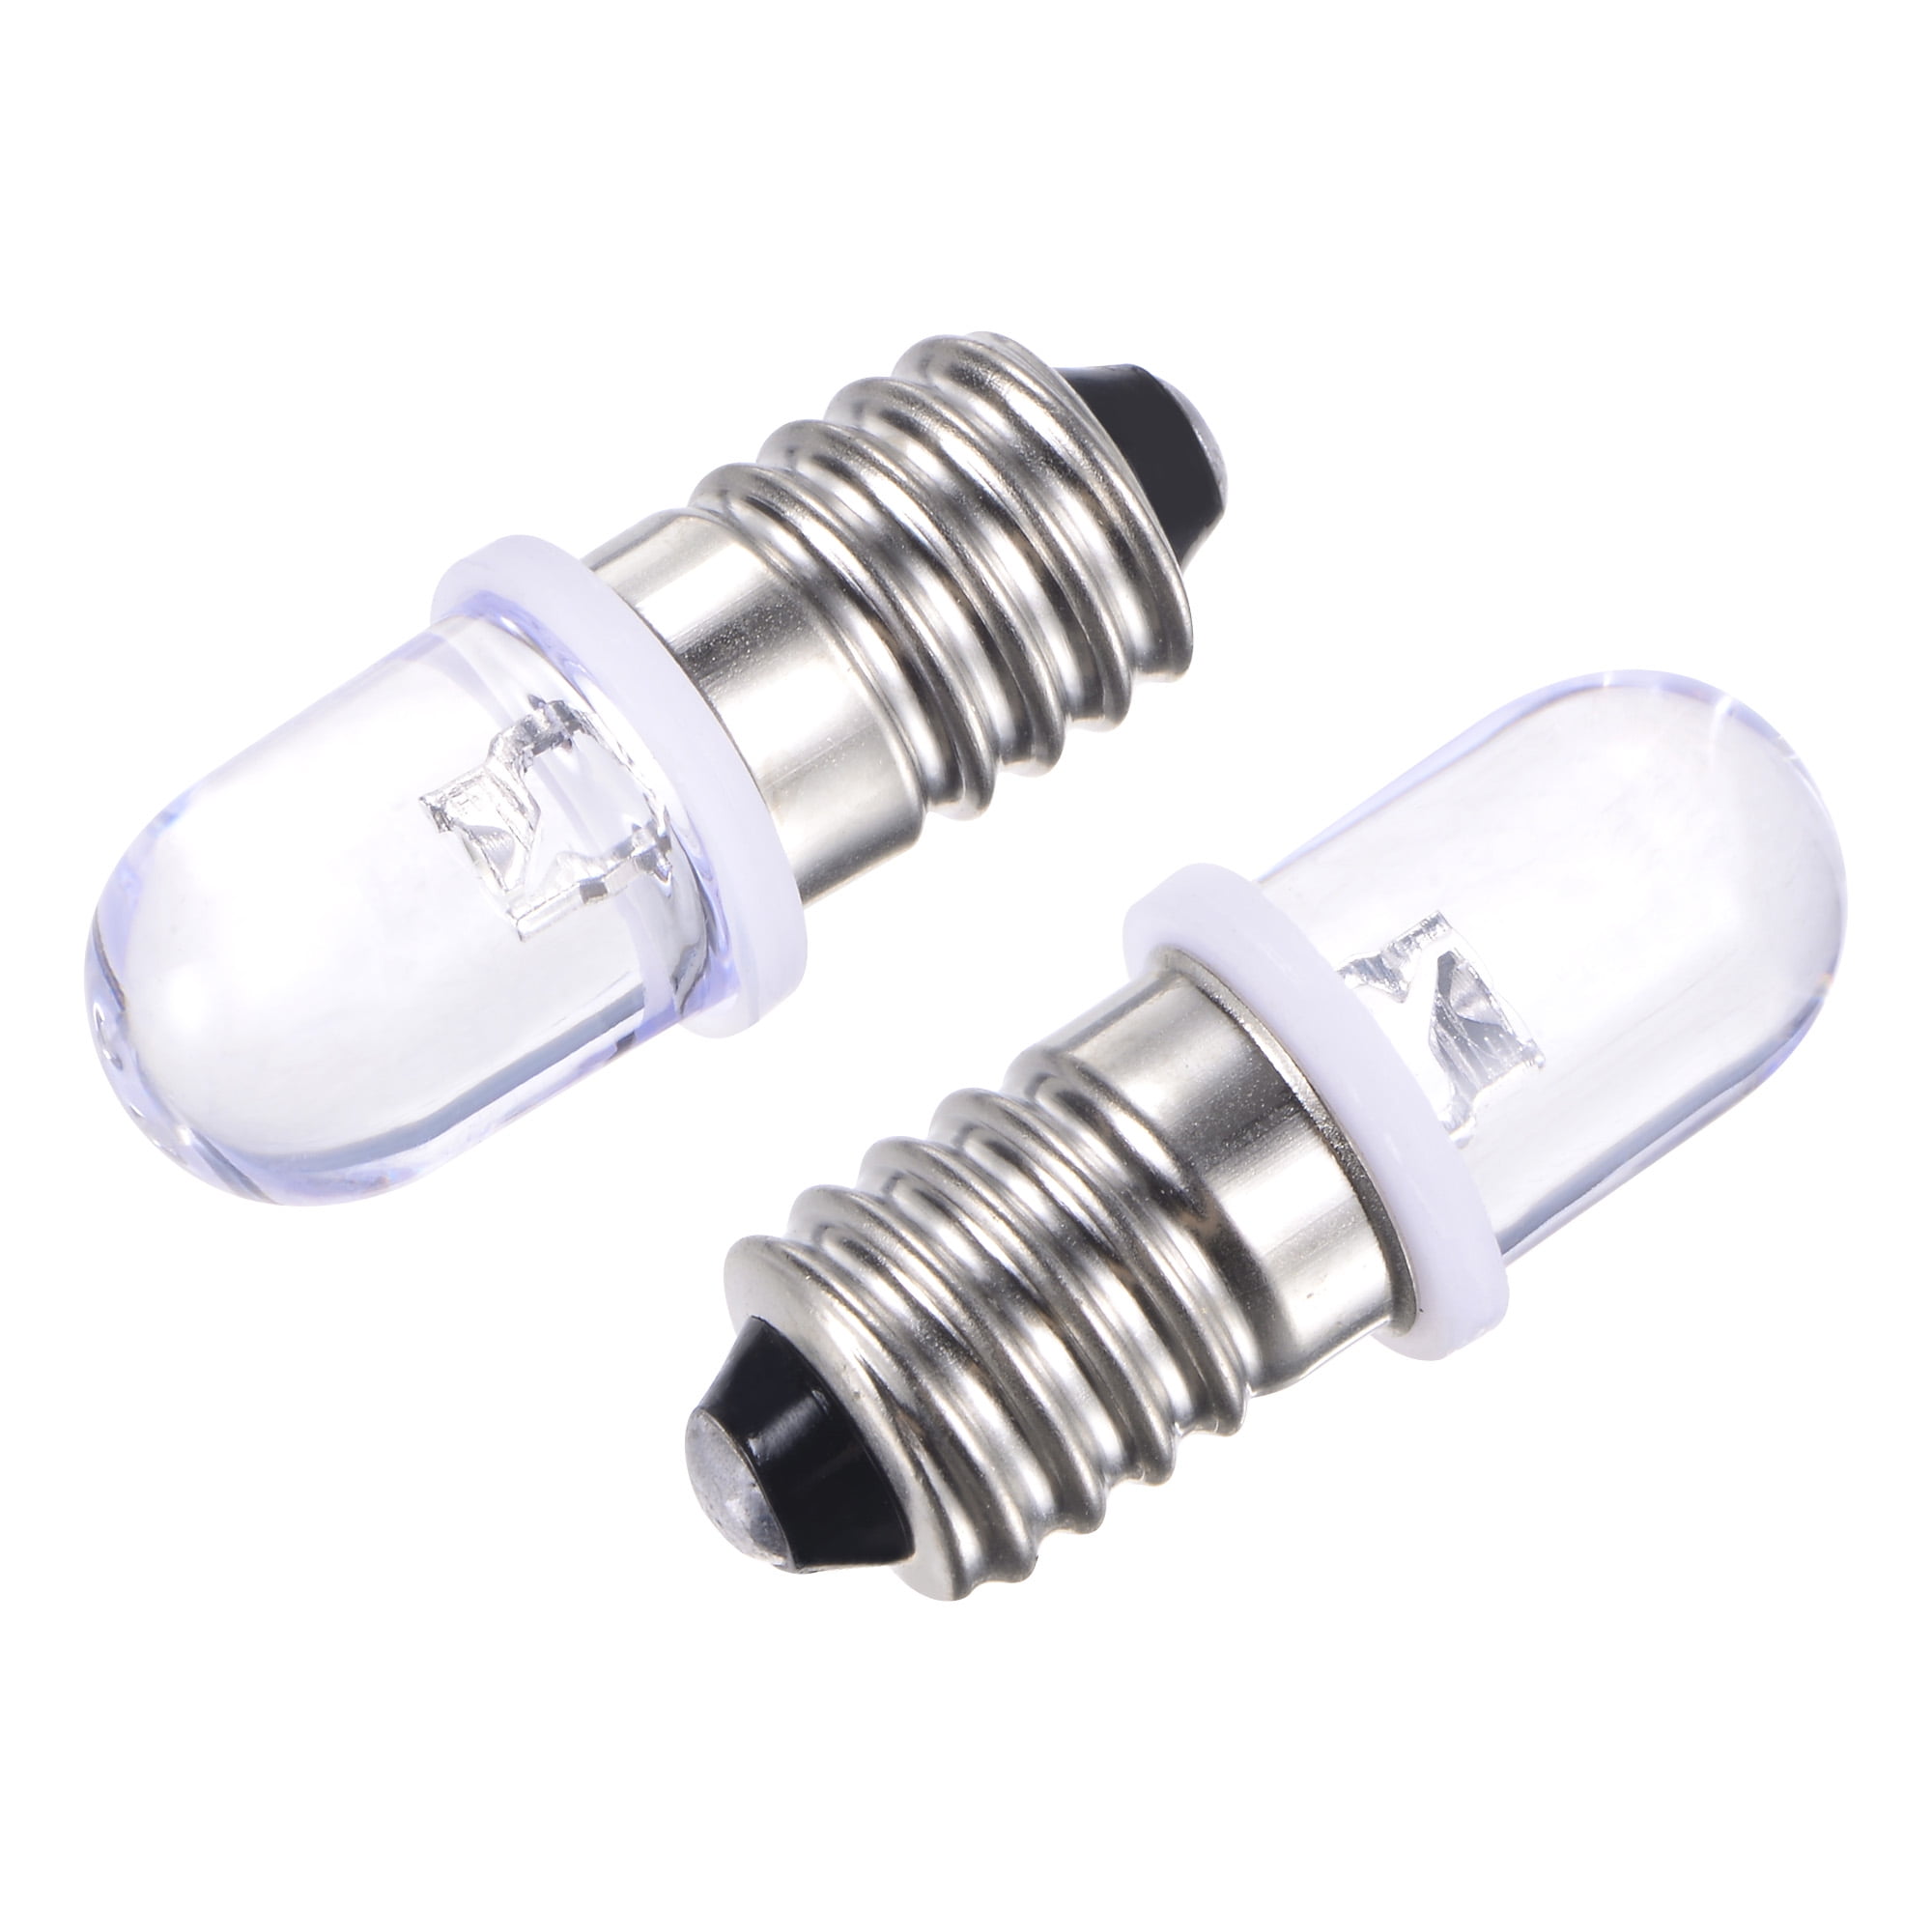 2 Cell tubular MES E10 miniature flashlight screw bulb 1X LED Torch lamp 3volt 